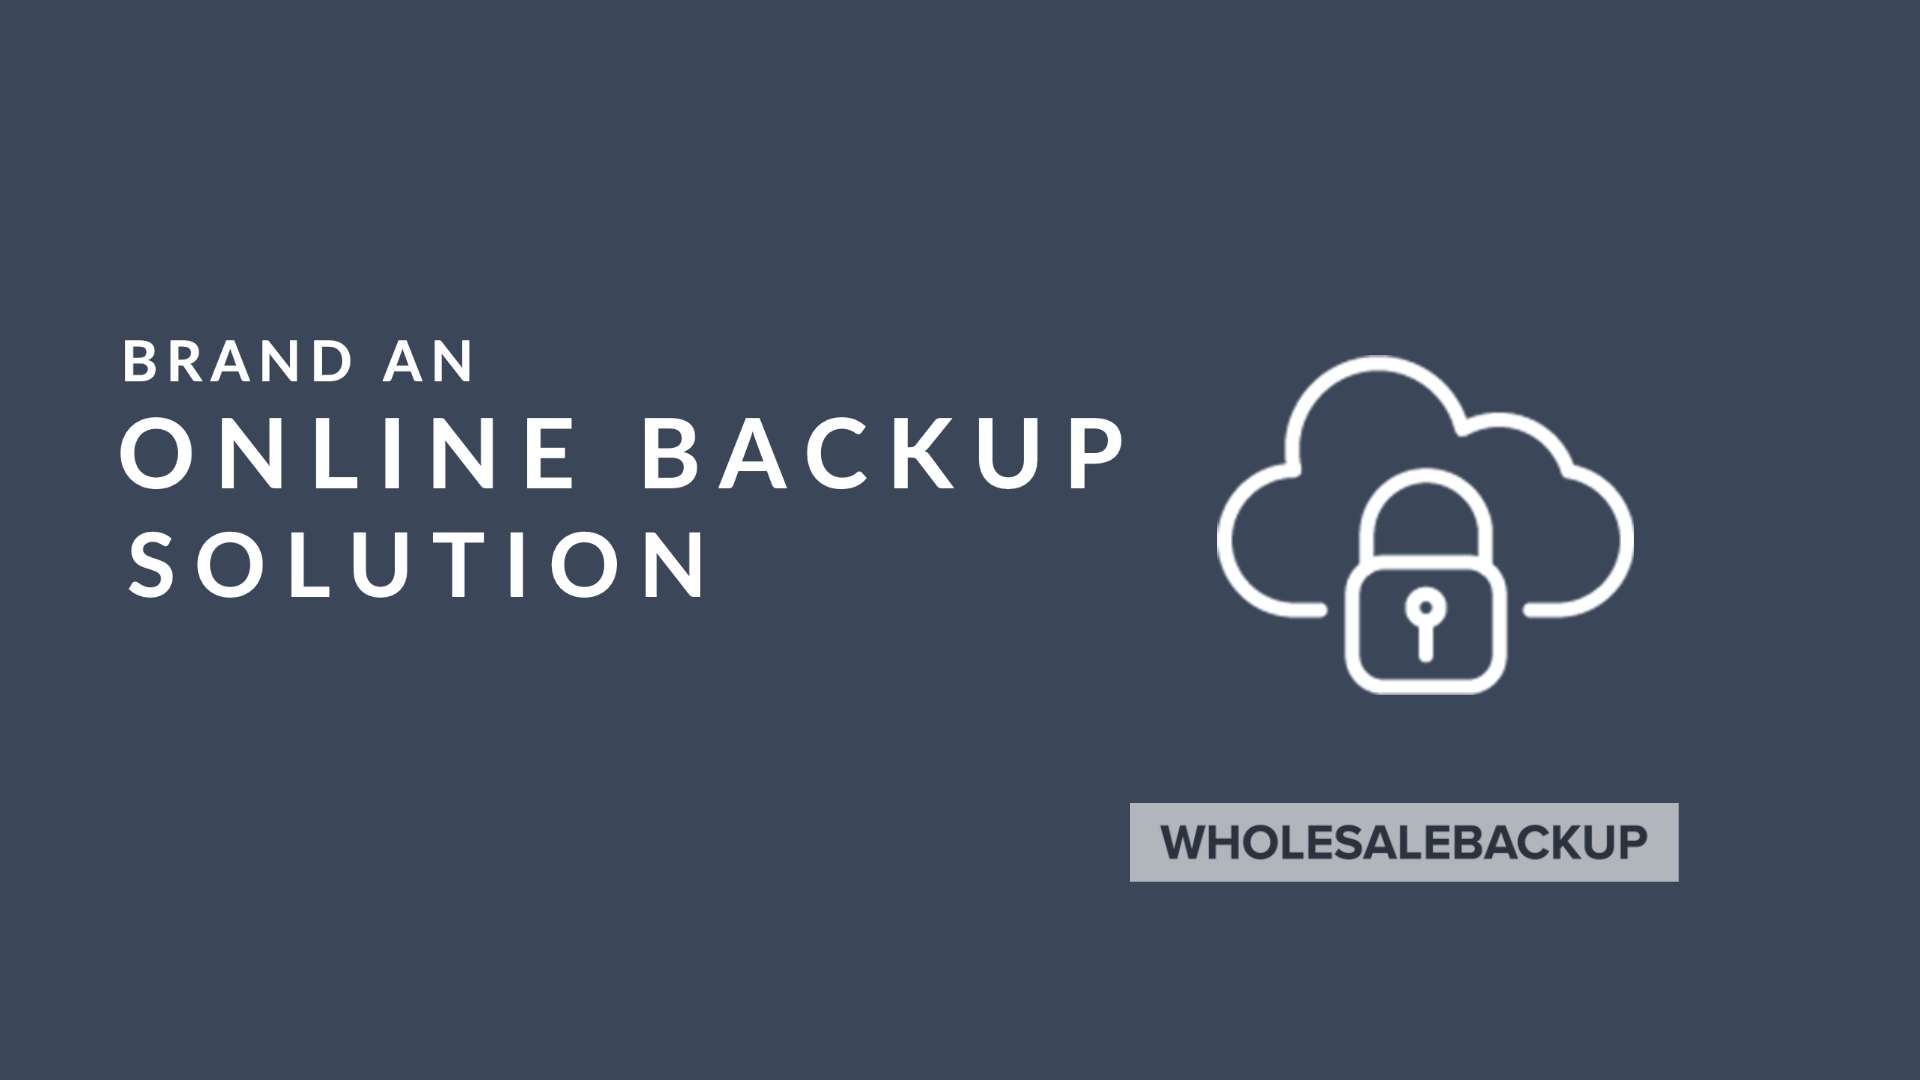 Brand an online backup solution using WholesaleBackup